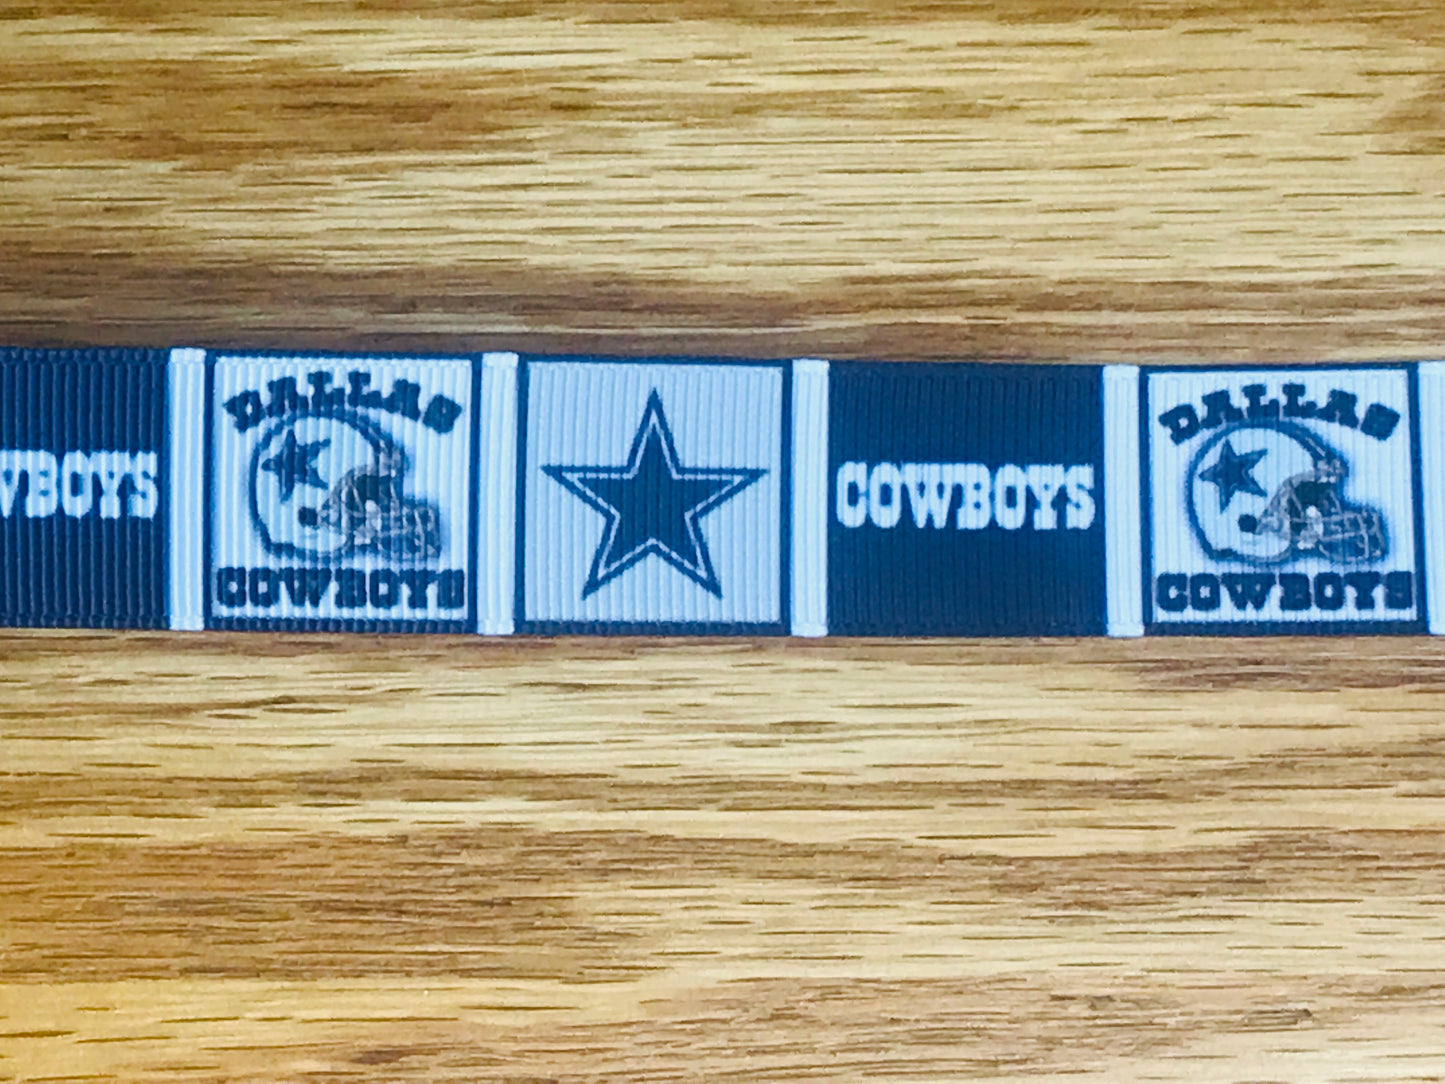 7/8" Wide Dallas Cowboys NFL Football Team Texas Printed Grosgrain Ribbon